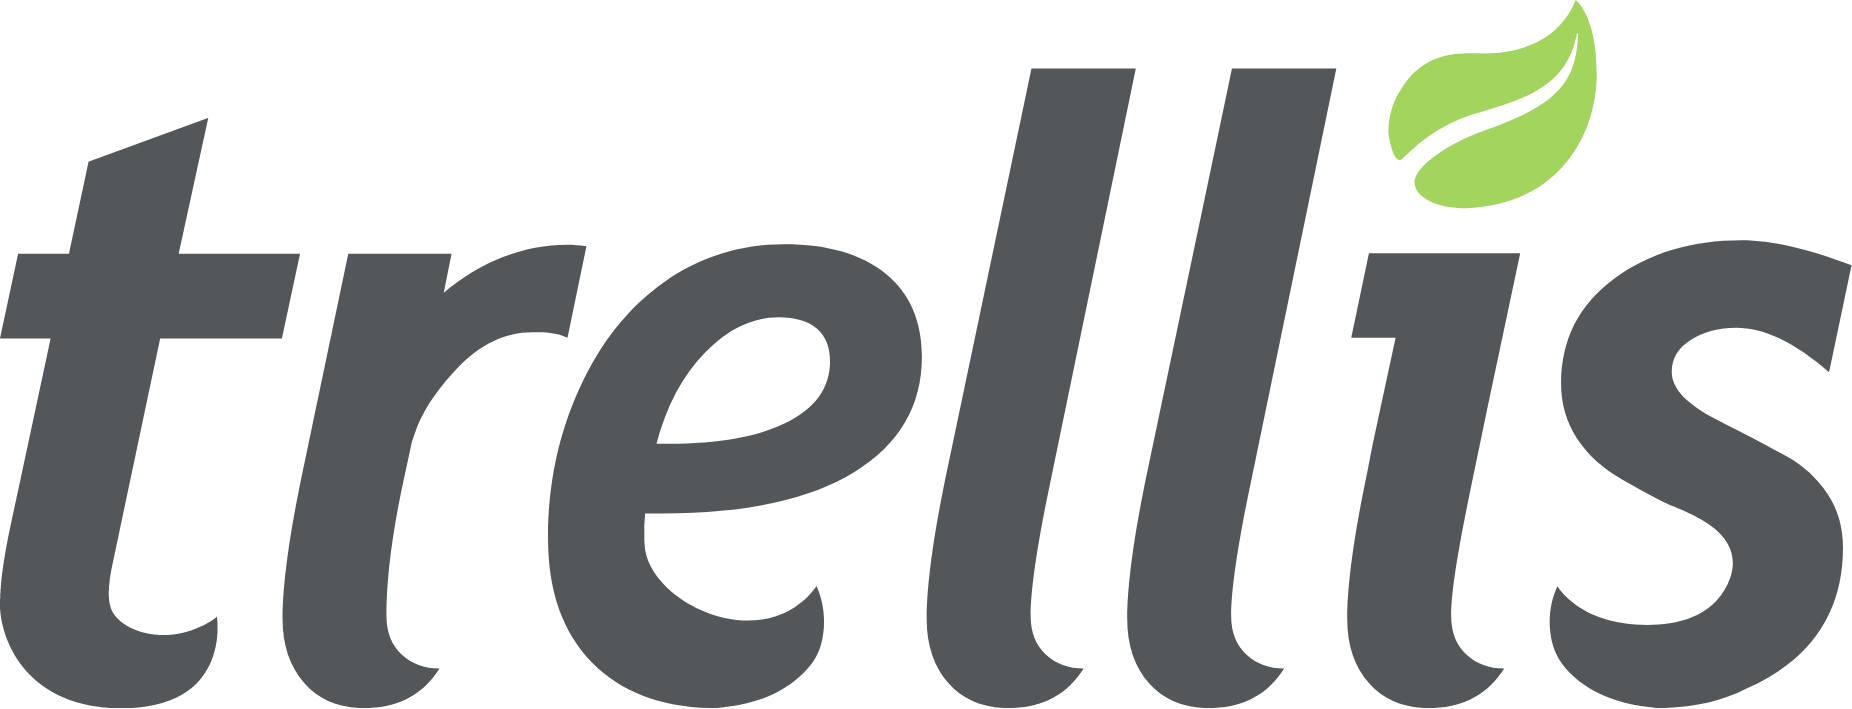 Trellis logo - no background